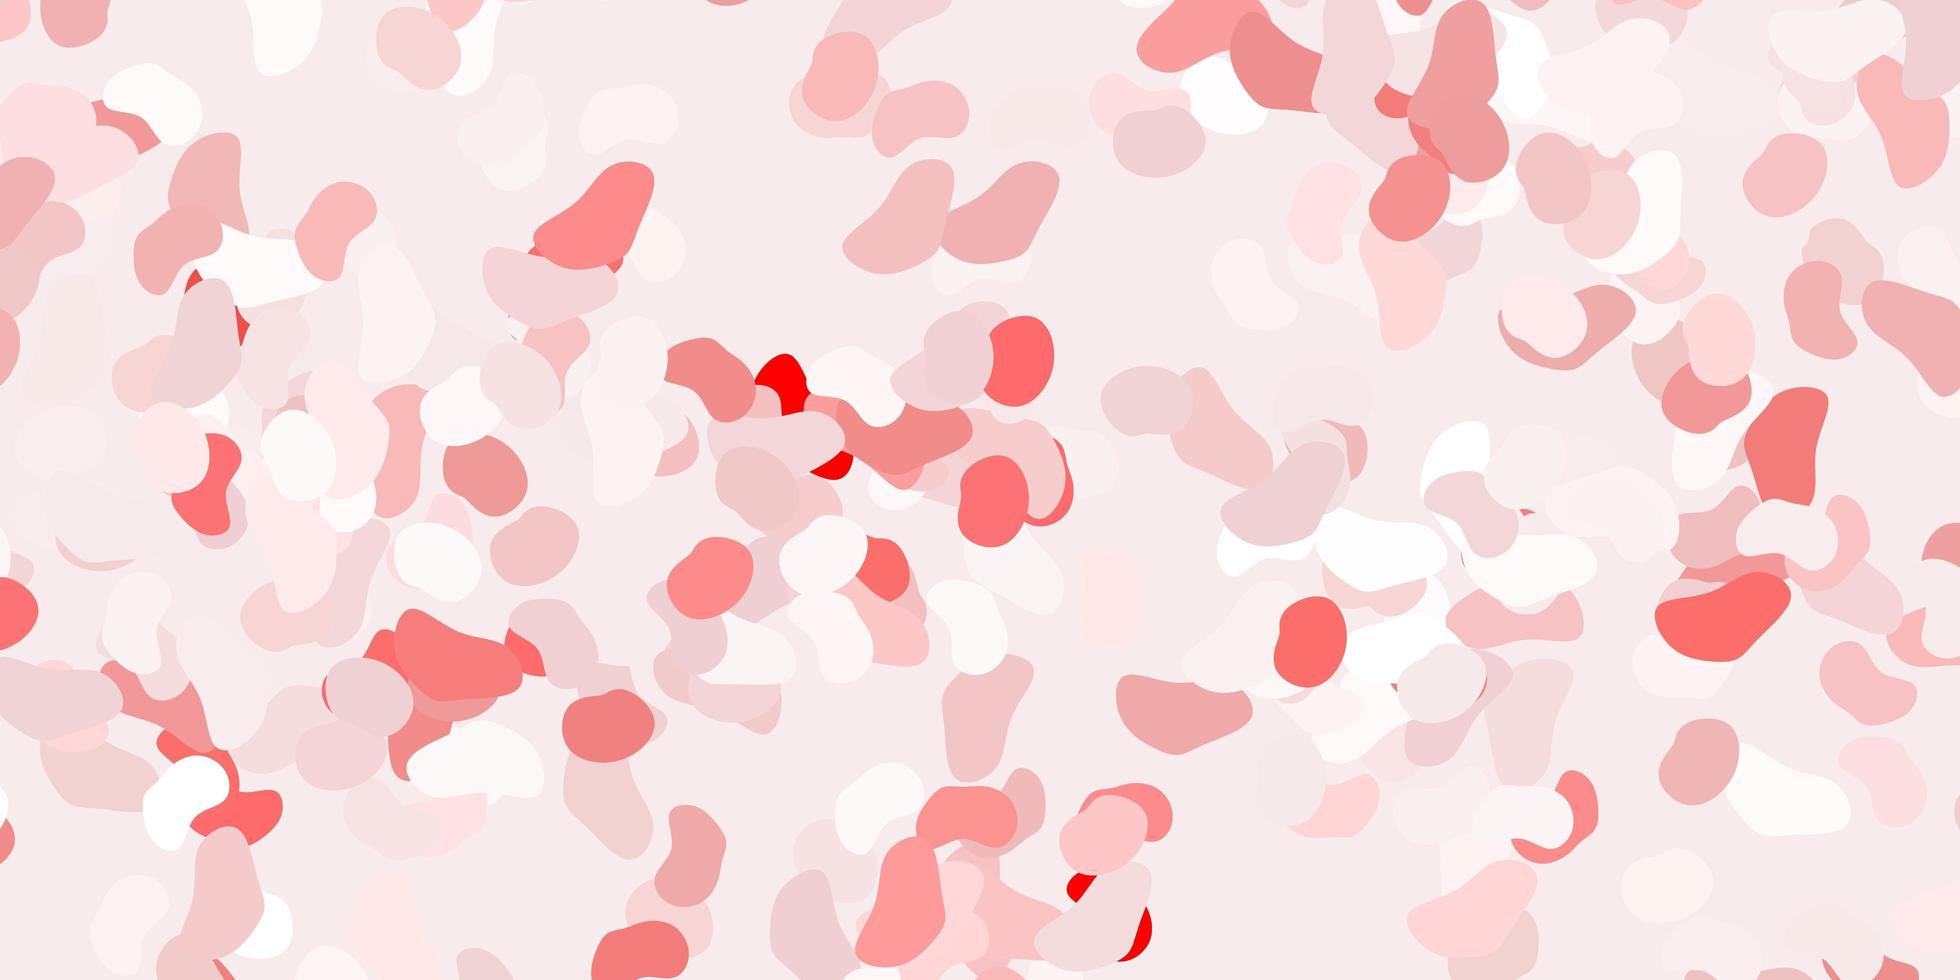 textura de vector rojo claro con formas de memphis